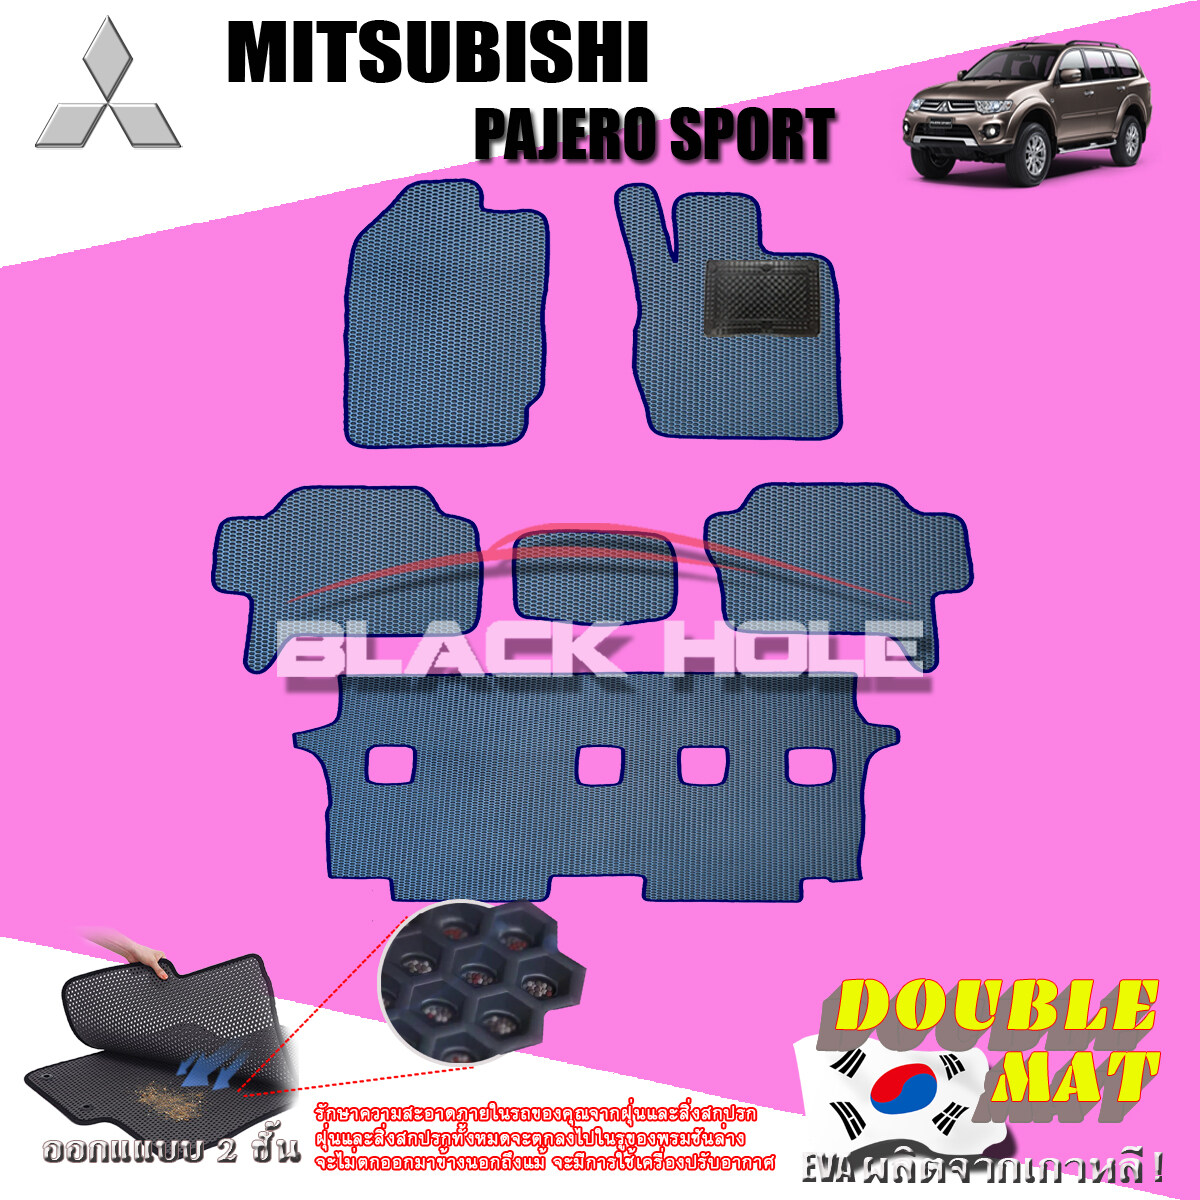 Mitsubishi Pajero Sport ปี 2008 - ปี 2014 พรมรถยนต์Pajero พรมเข้ารูปสองชั้นแบบรูรังผึ้ง Blackhole Double Mat (ชุดห้องโดยสาร) สี SET B ( 6 Pcs. ) Blue-สีน้ำเงินขอบเดิม ( 6 ชิ้น ) สี SET B ( 6 Pcs. ) Blue-สีน้ำเงินขอบเดิม ( 6 ชิ้น )